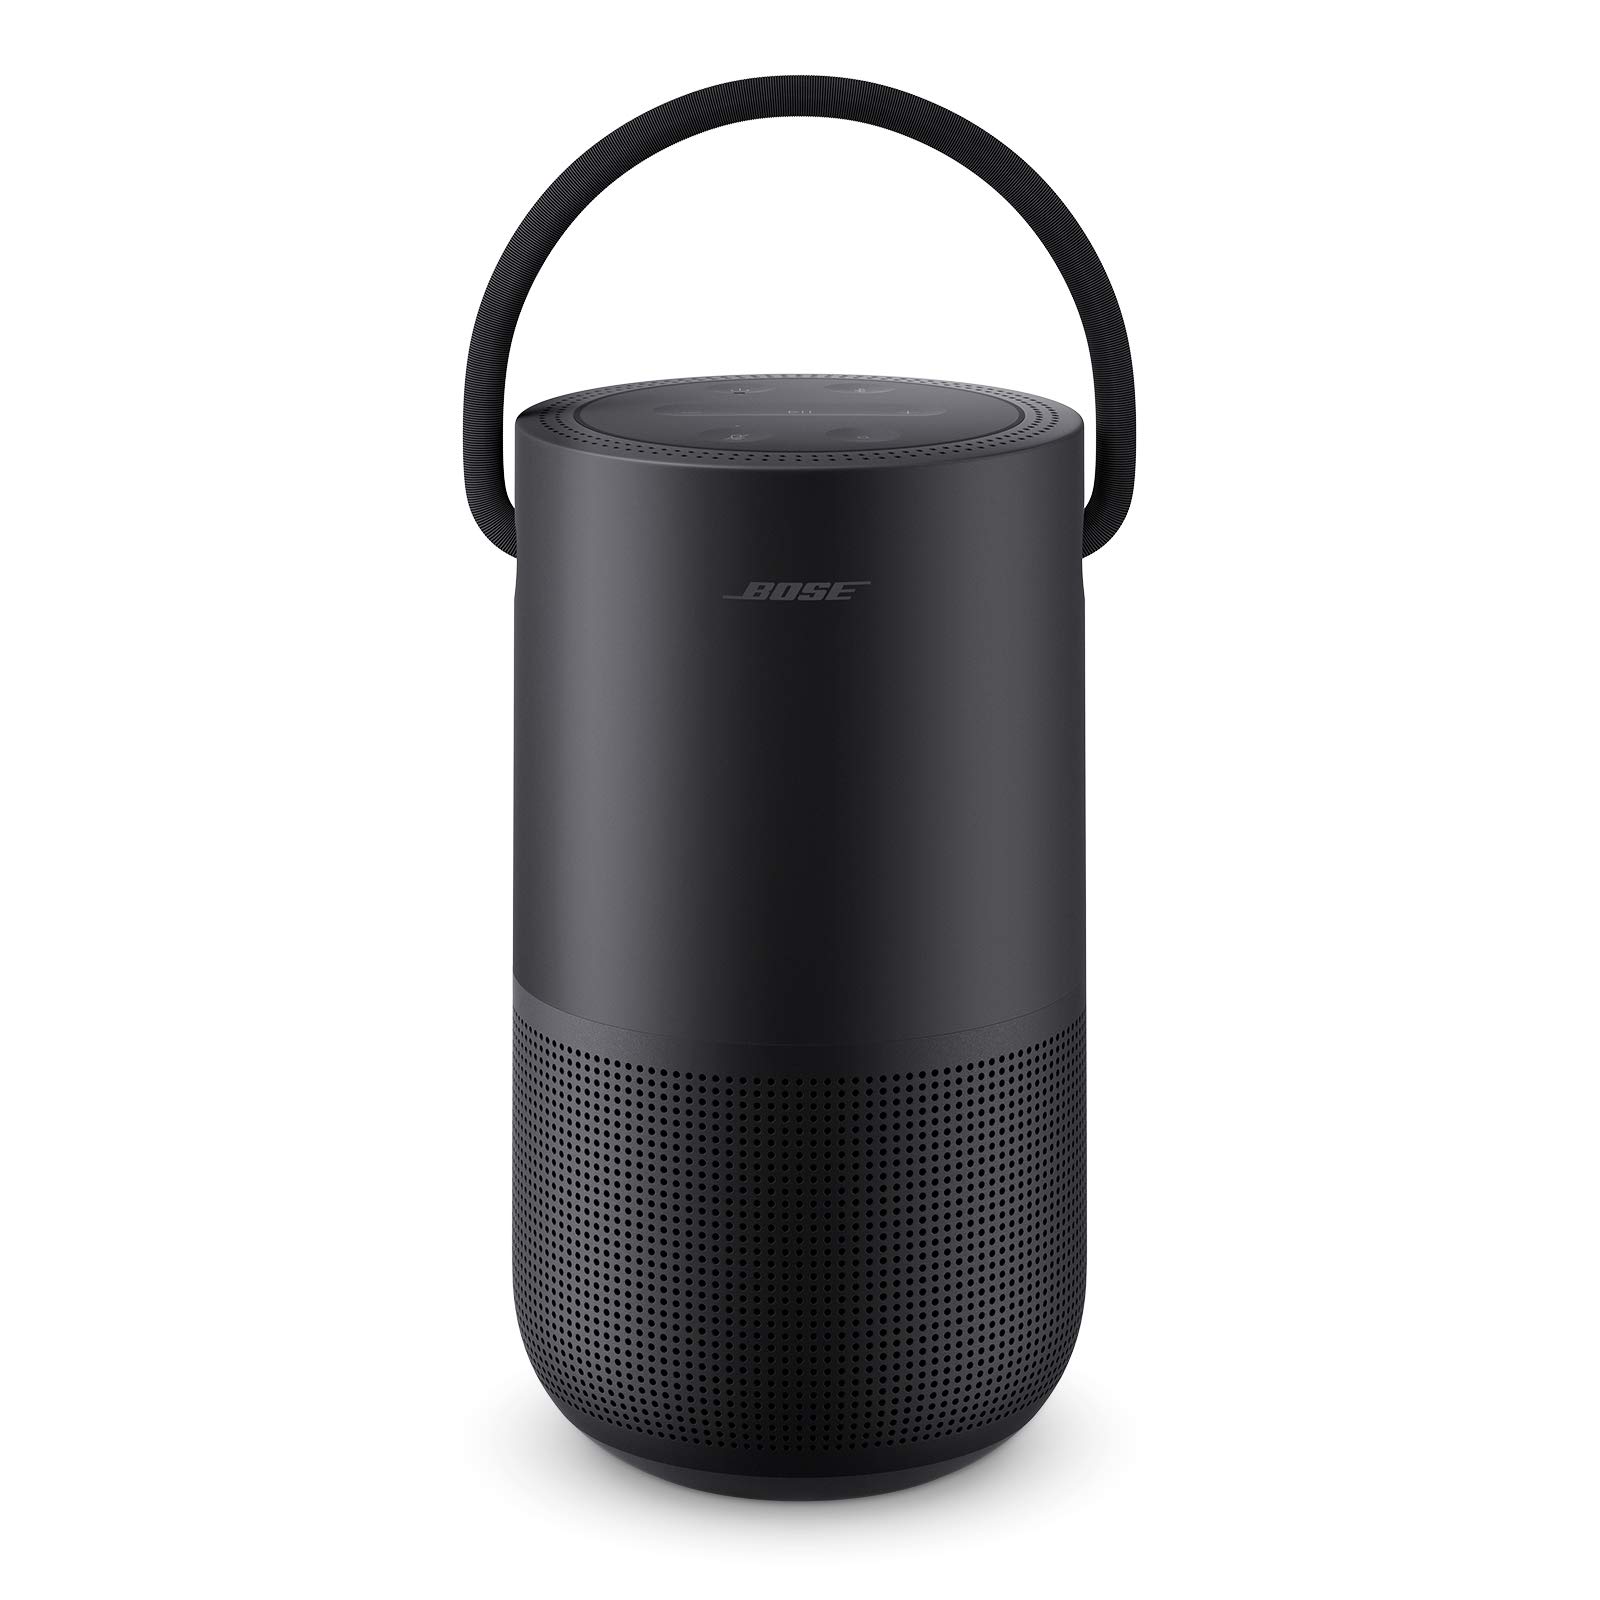 BOSE Portable Smart Speaker — Wireless Bluetooth Speaker with Alexa Voice Control Built-In, Black